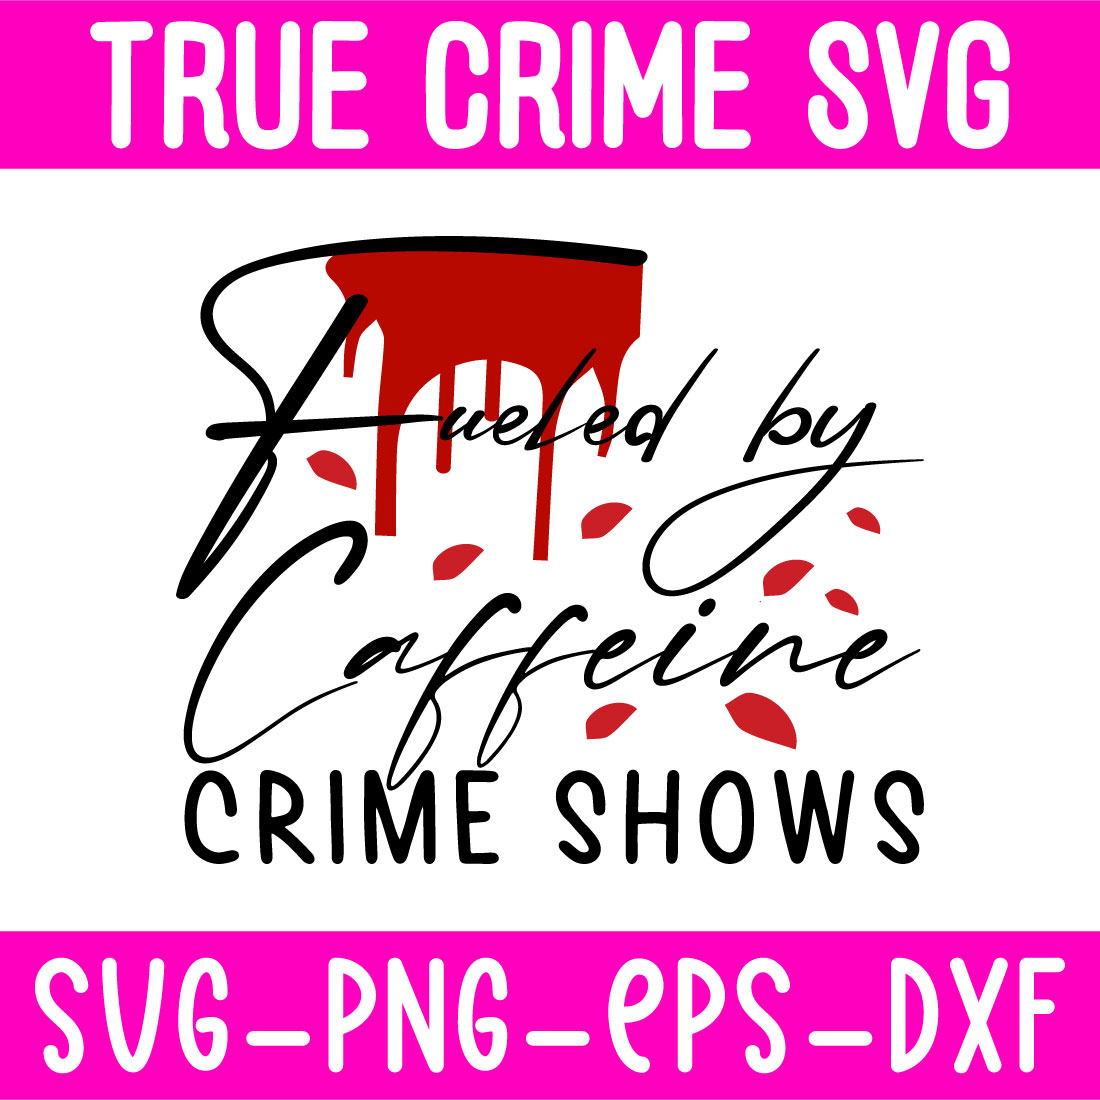 True Crime Svg cover image.